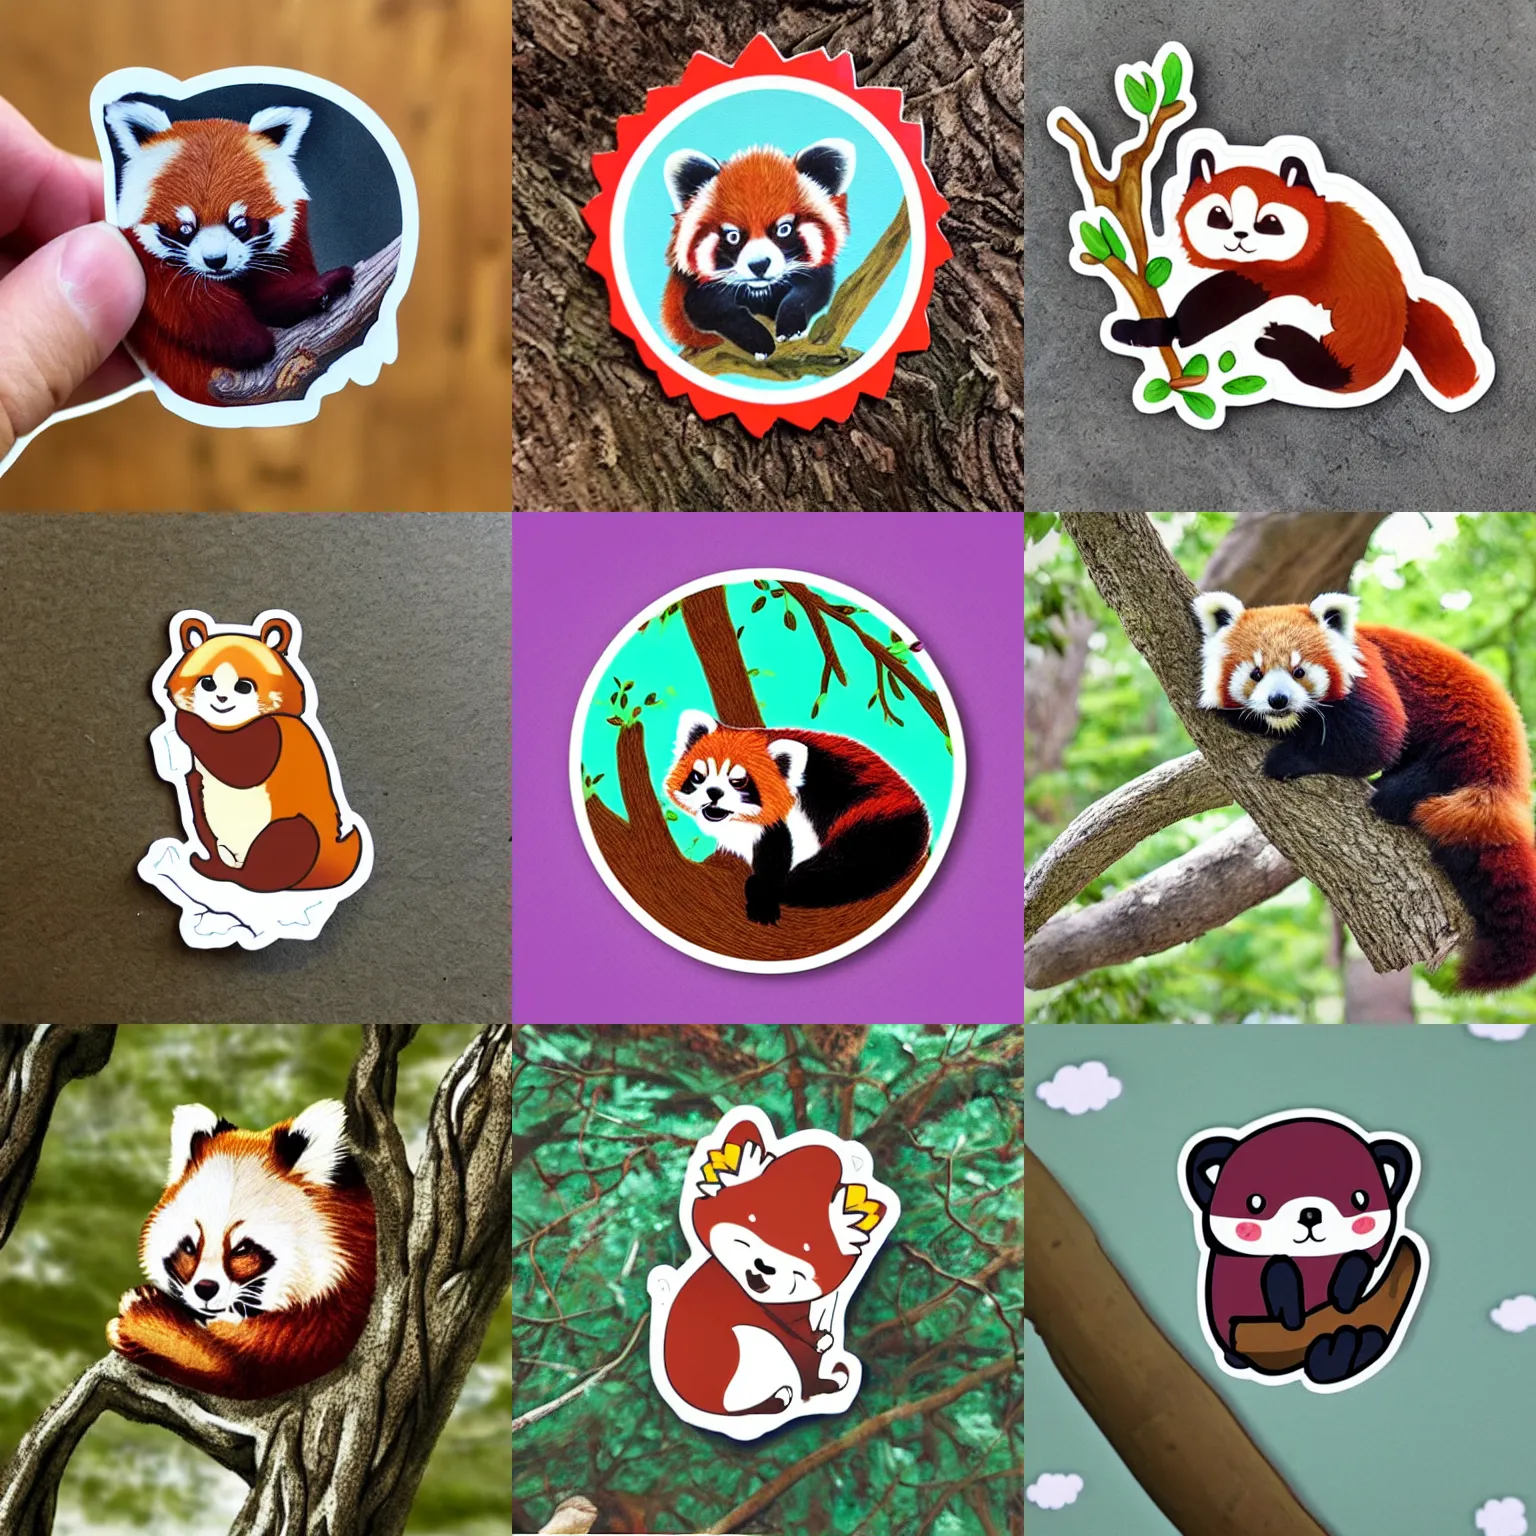 Prompt: a sticker of a red panda sleeping on a tree branch, limbs dangling, kawaii cutest sticker ever